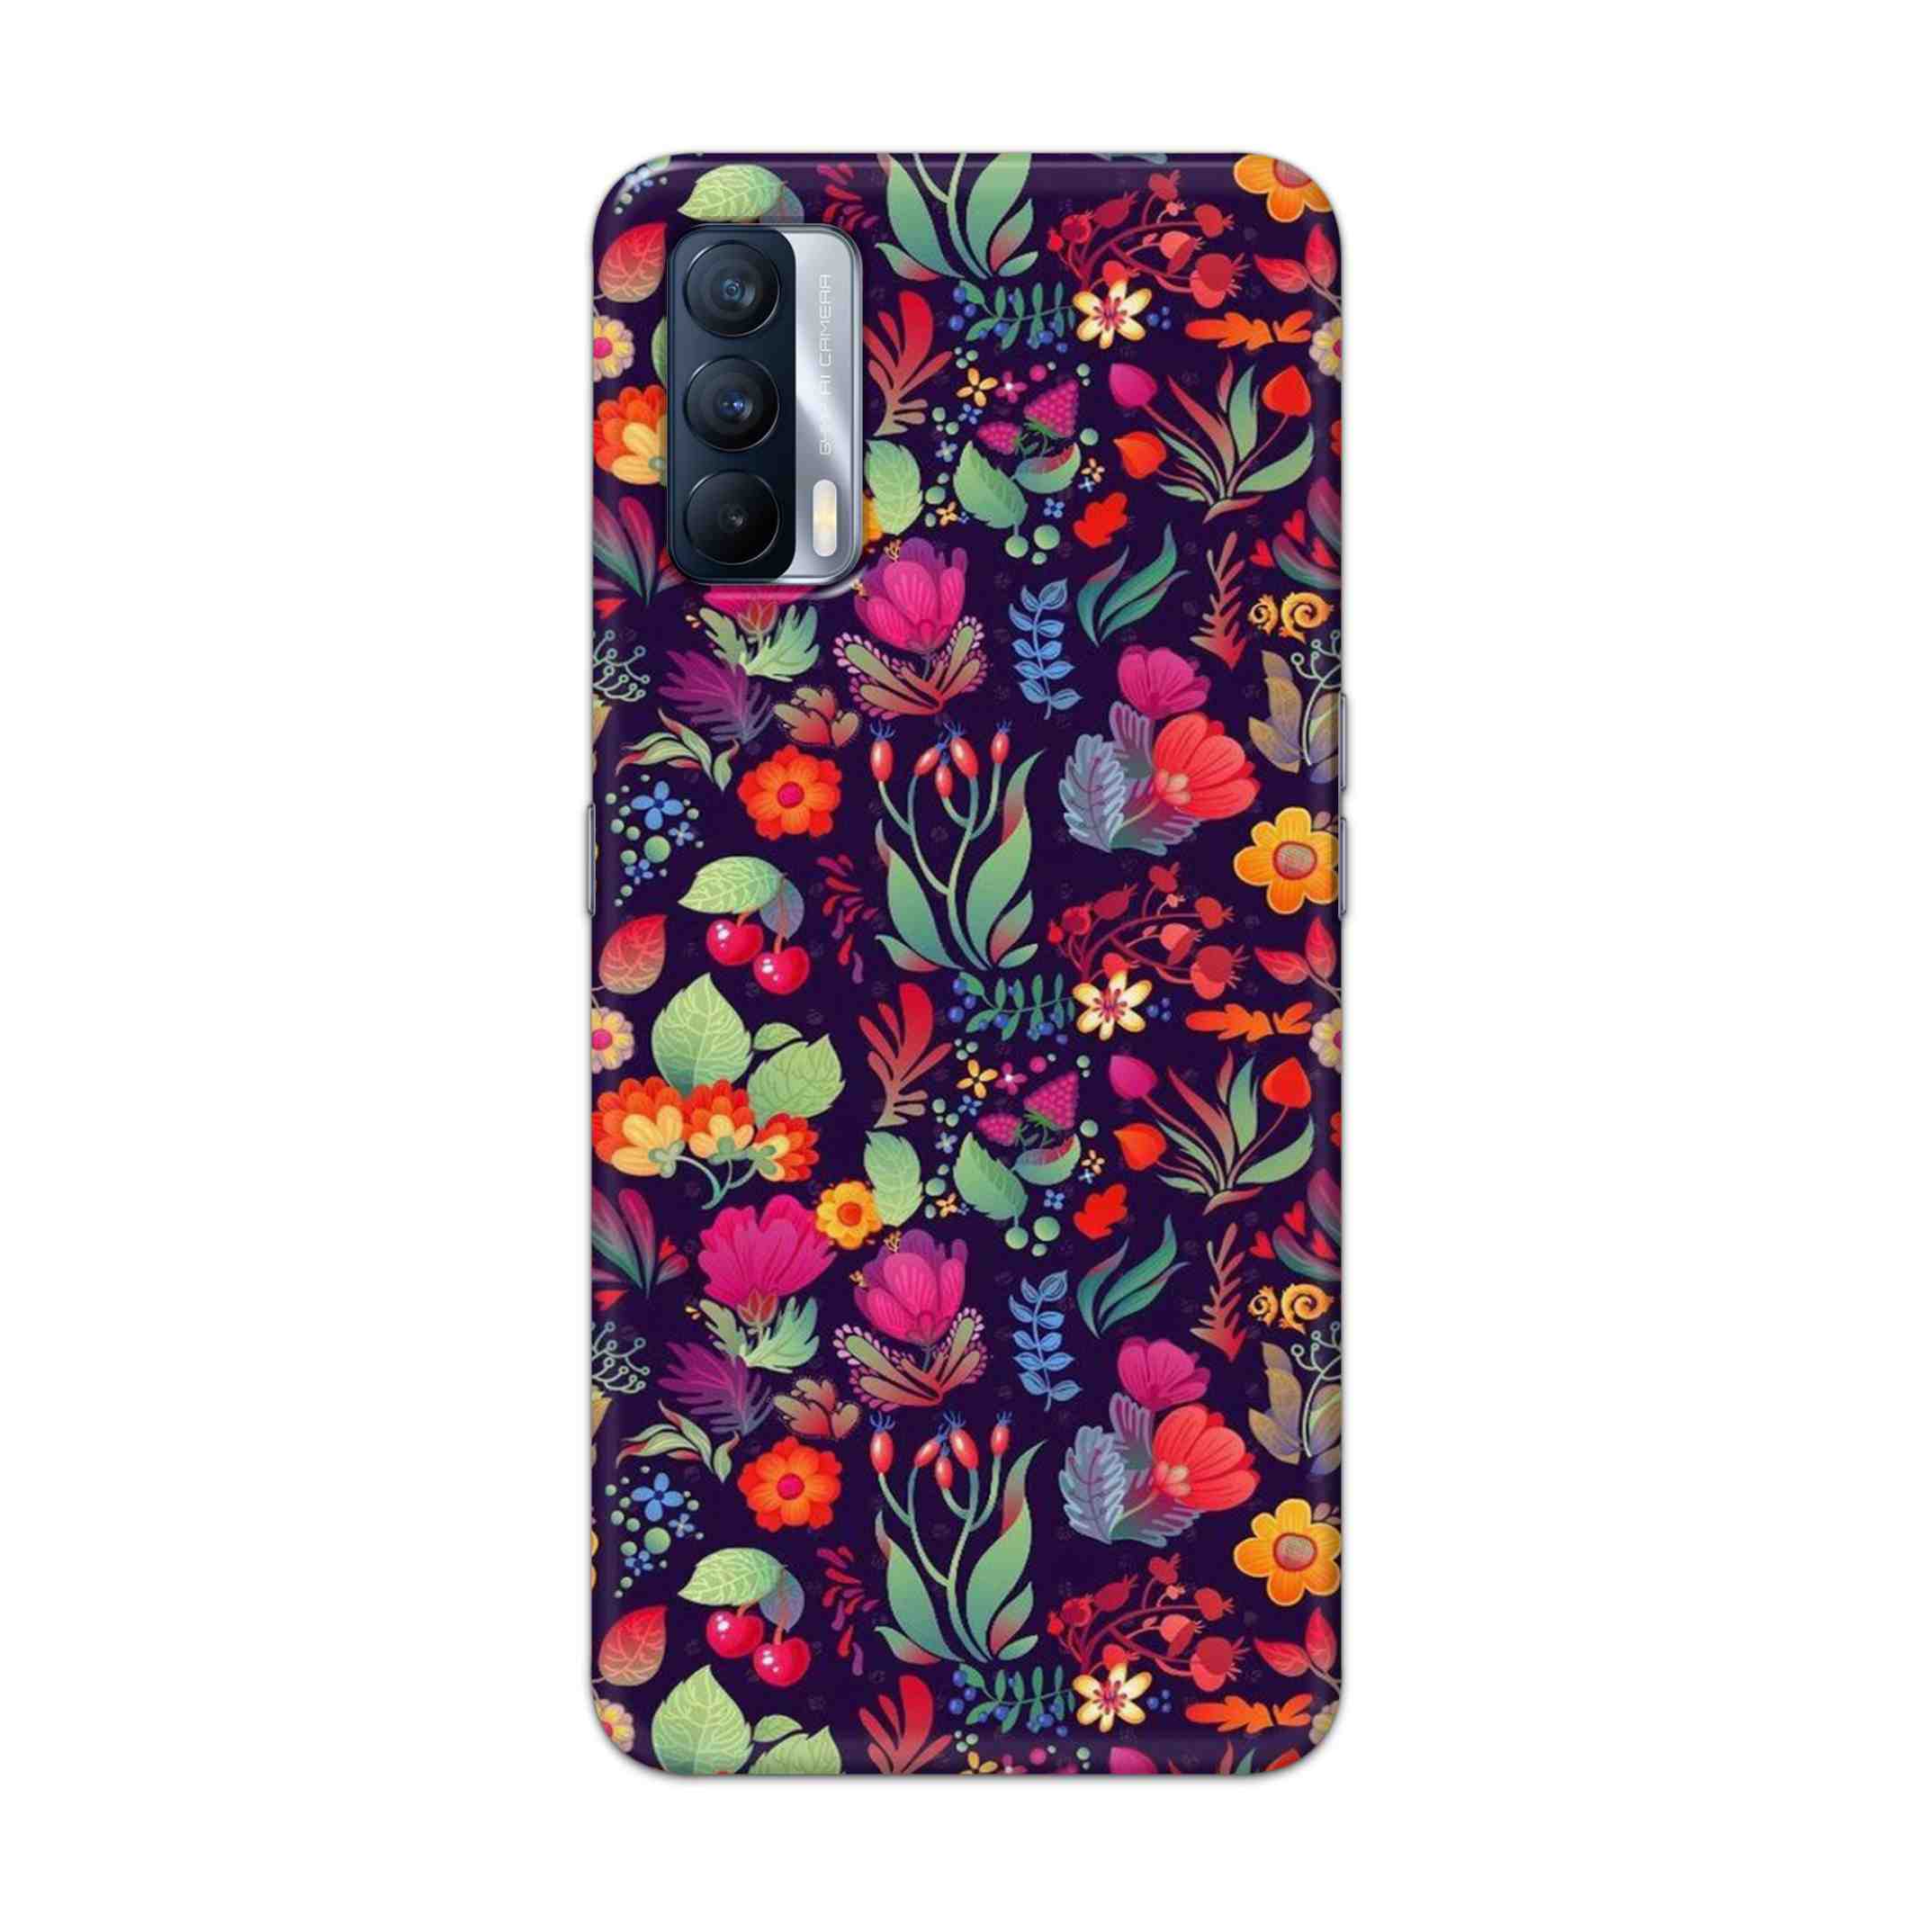 Buy Fruits Flower Hard Back Mobile Phone Case Cover For Realme X7 Online